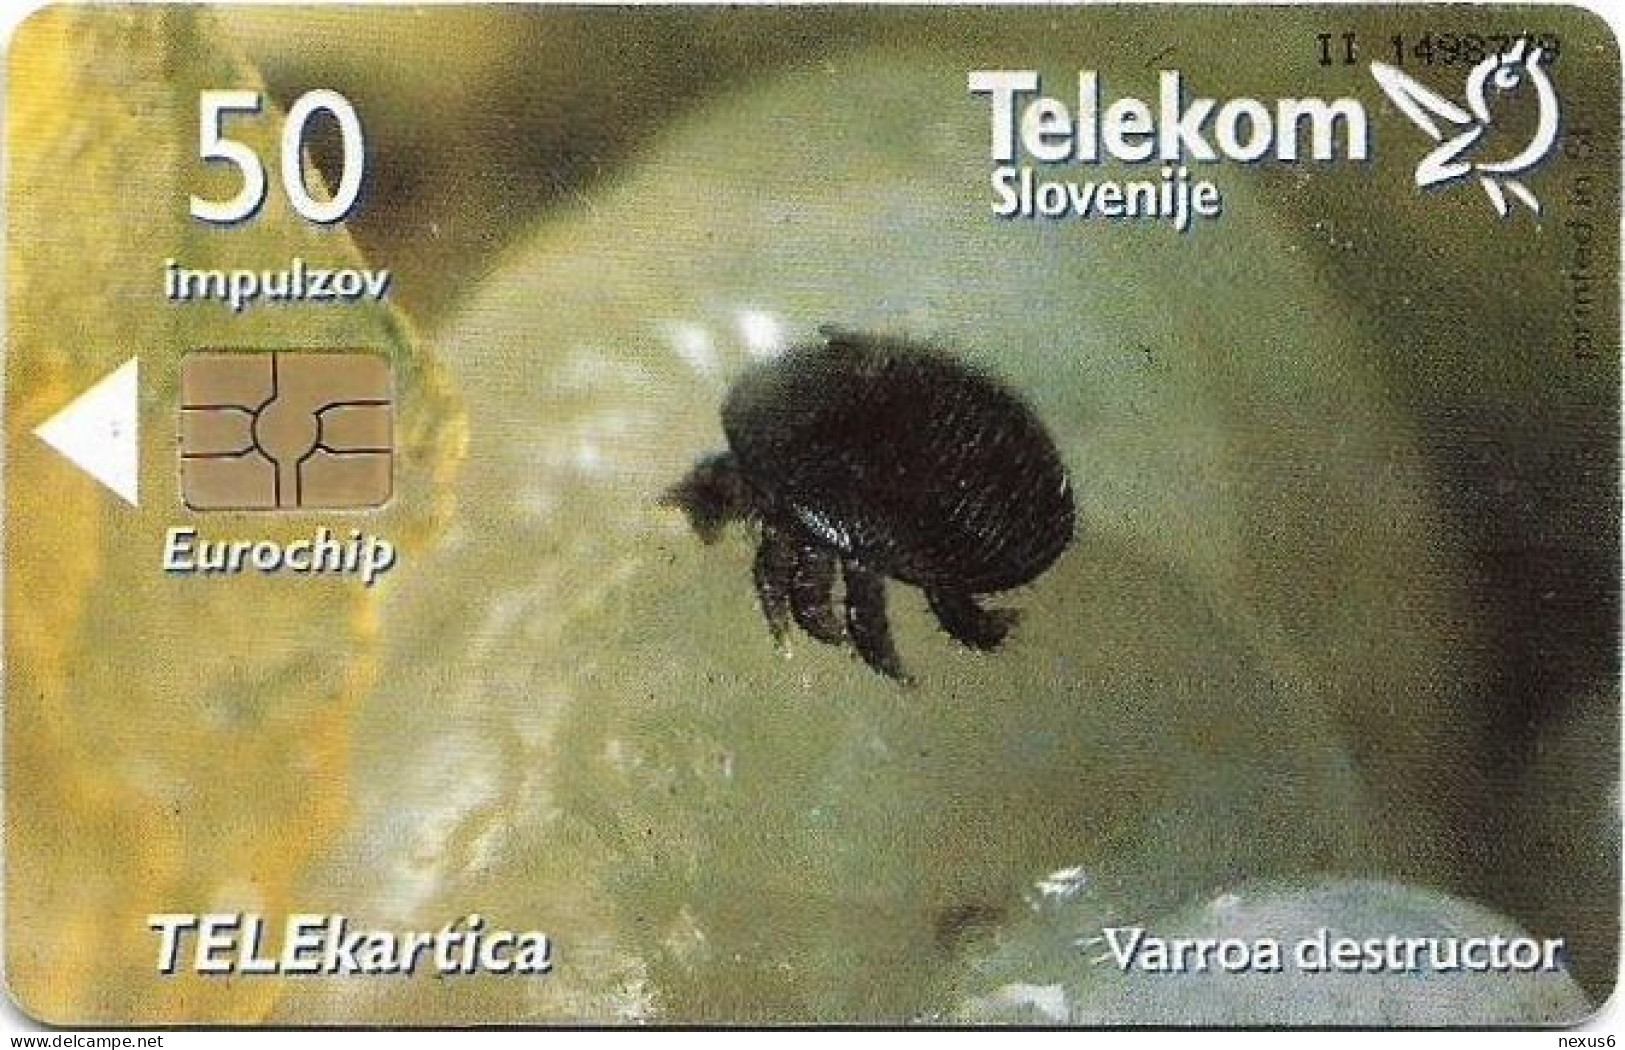 Slovenia - Telekom Slovenije - Carniolan Honey Bee - Varroa Destructor, Gem5 Red, 07.2001, 50Units, 9.962ex, Used - Slowenien